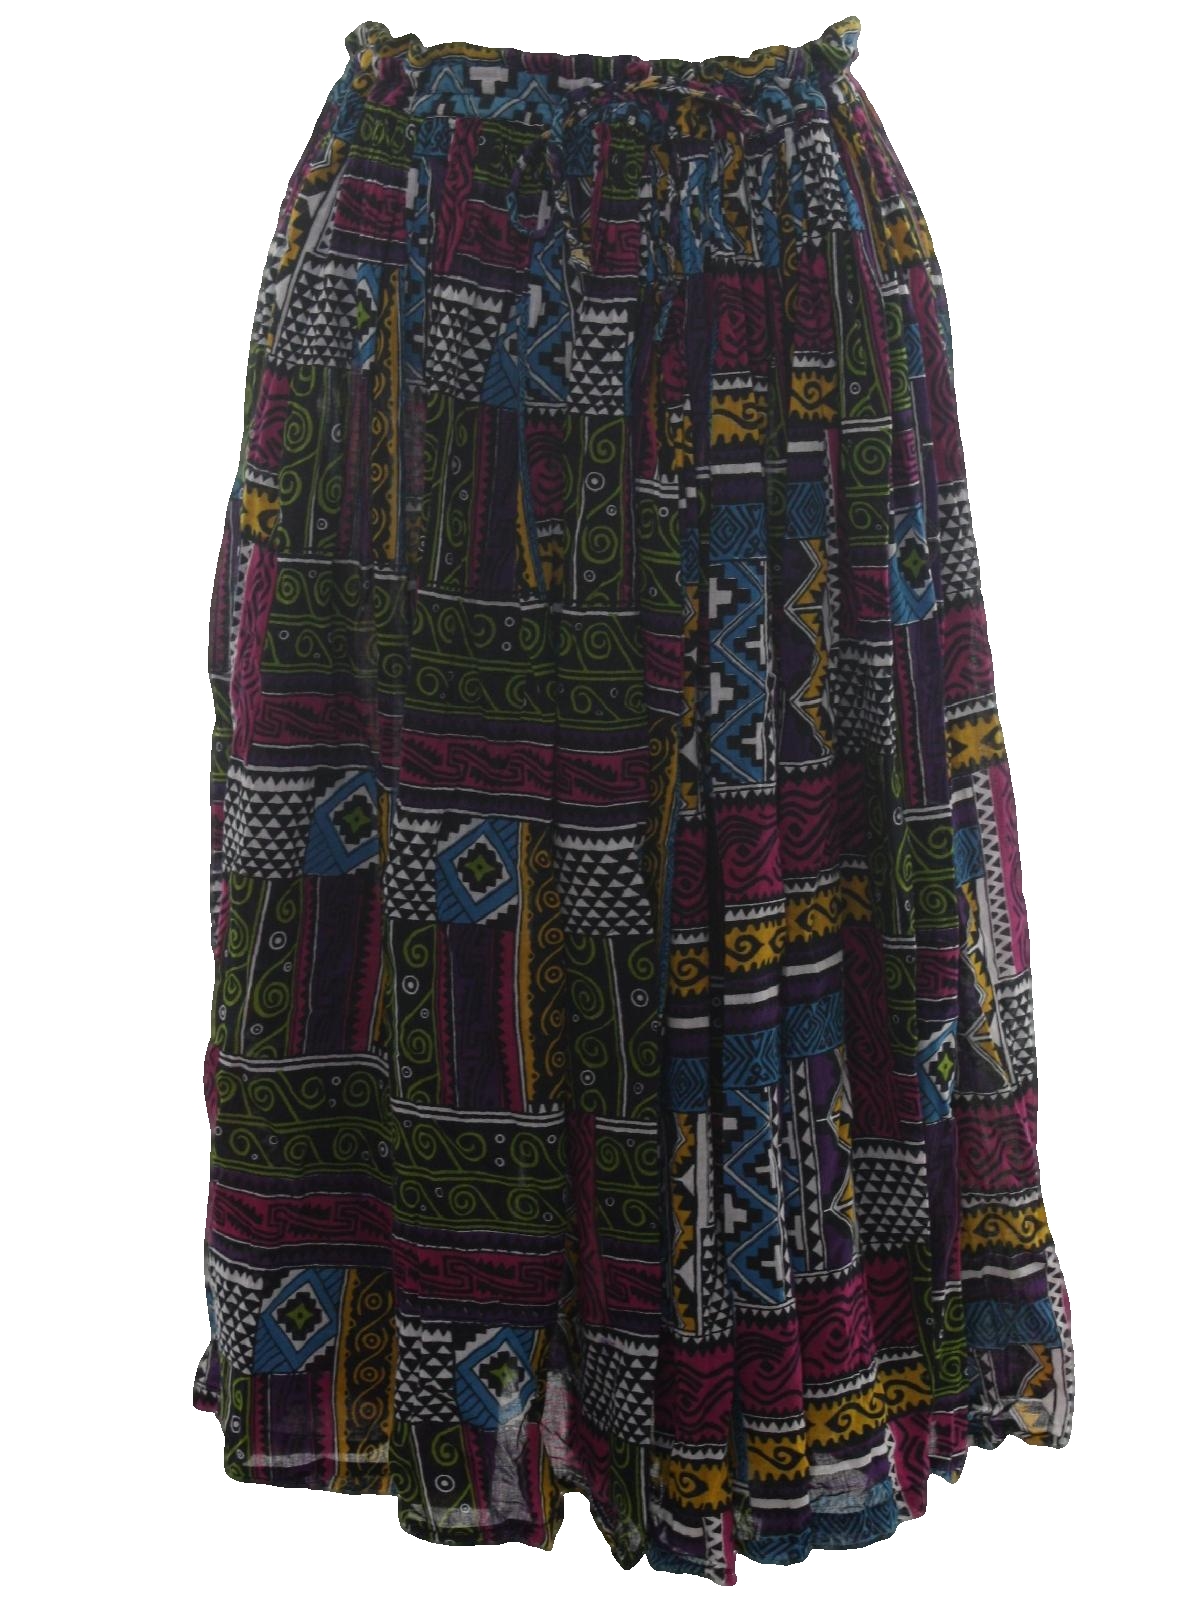 Retro 1990's Hippie Skirt (Missing Label) : 90s -Missing Label- Womens ...